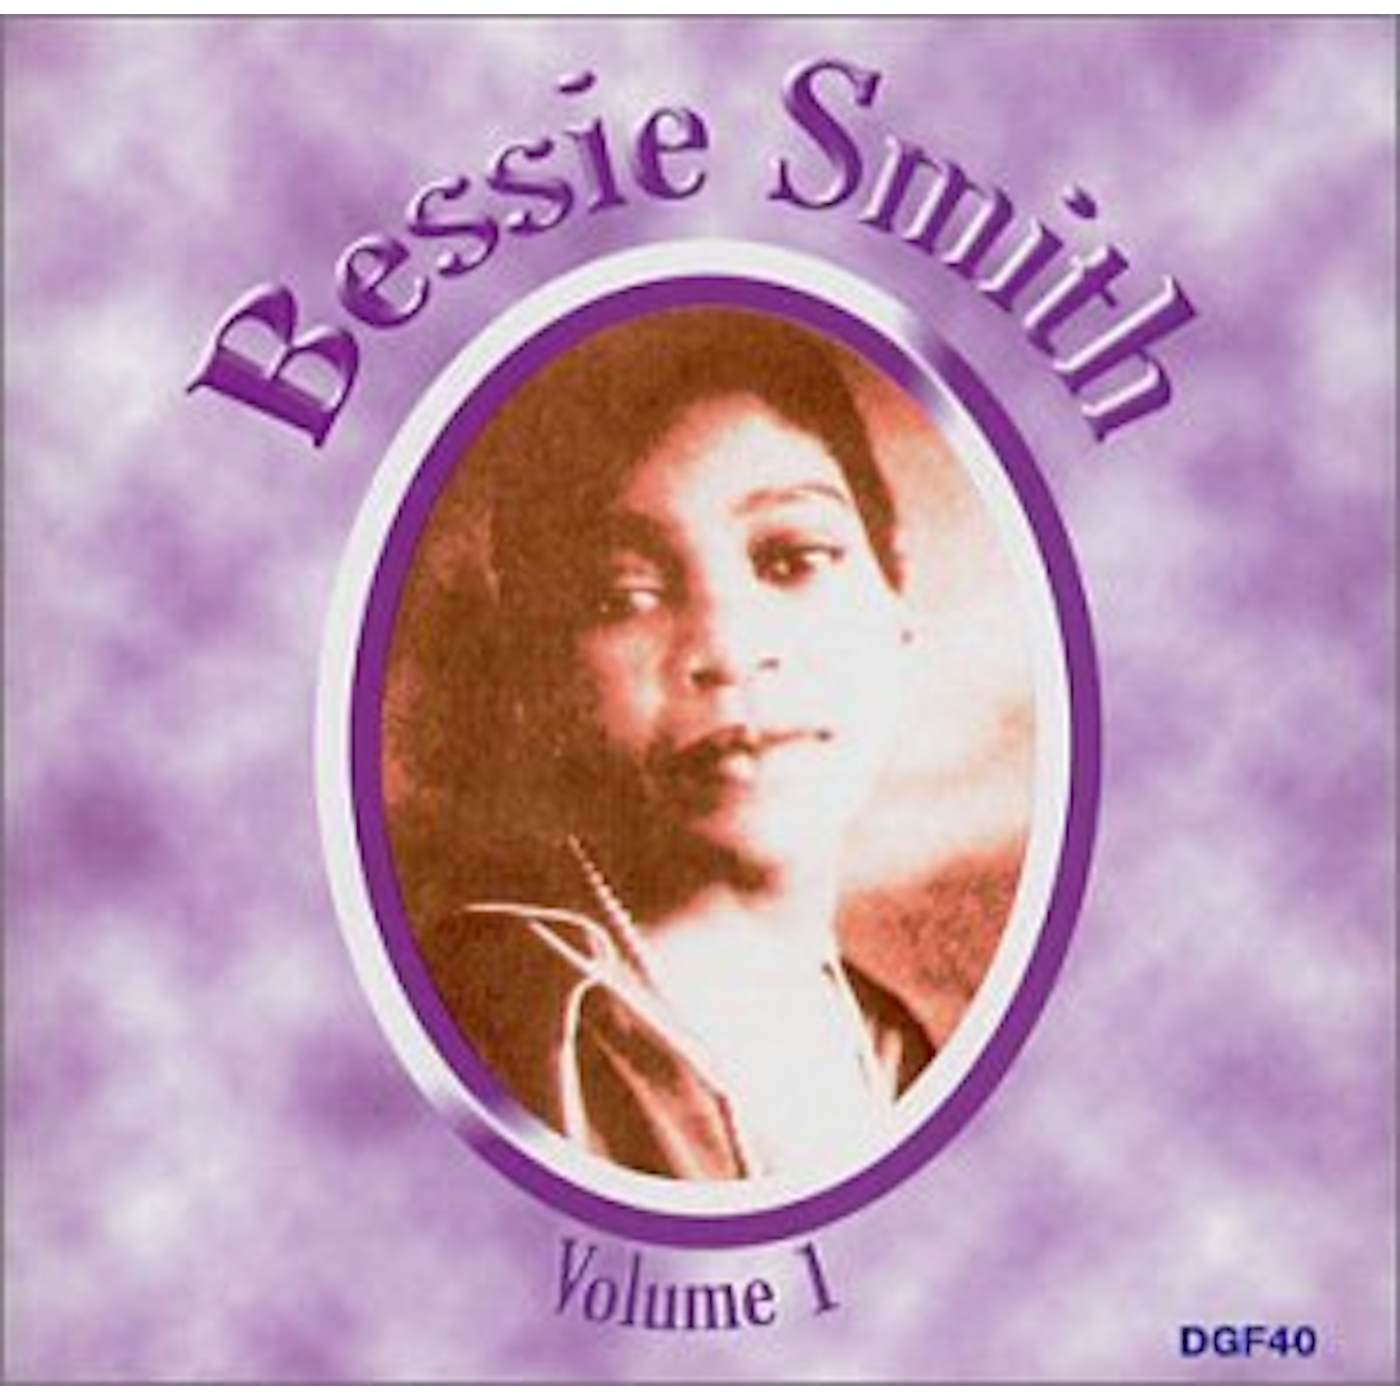 Bessie Smith COMPLETE RECORDINGS 1 CD